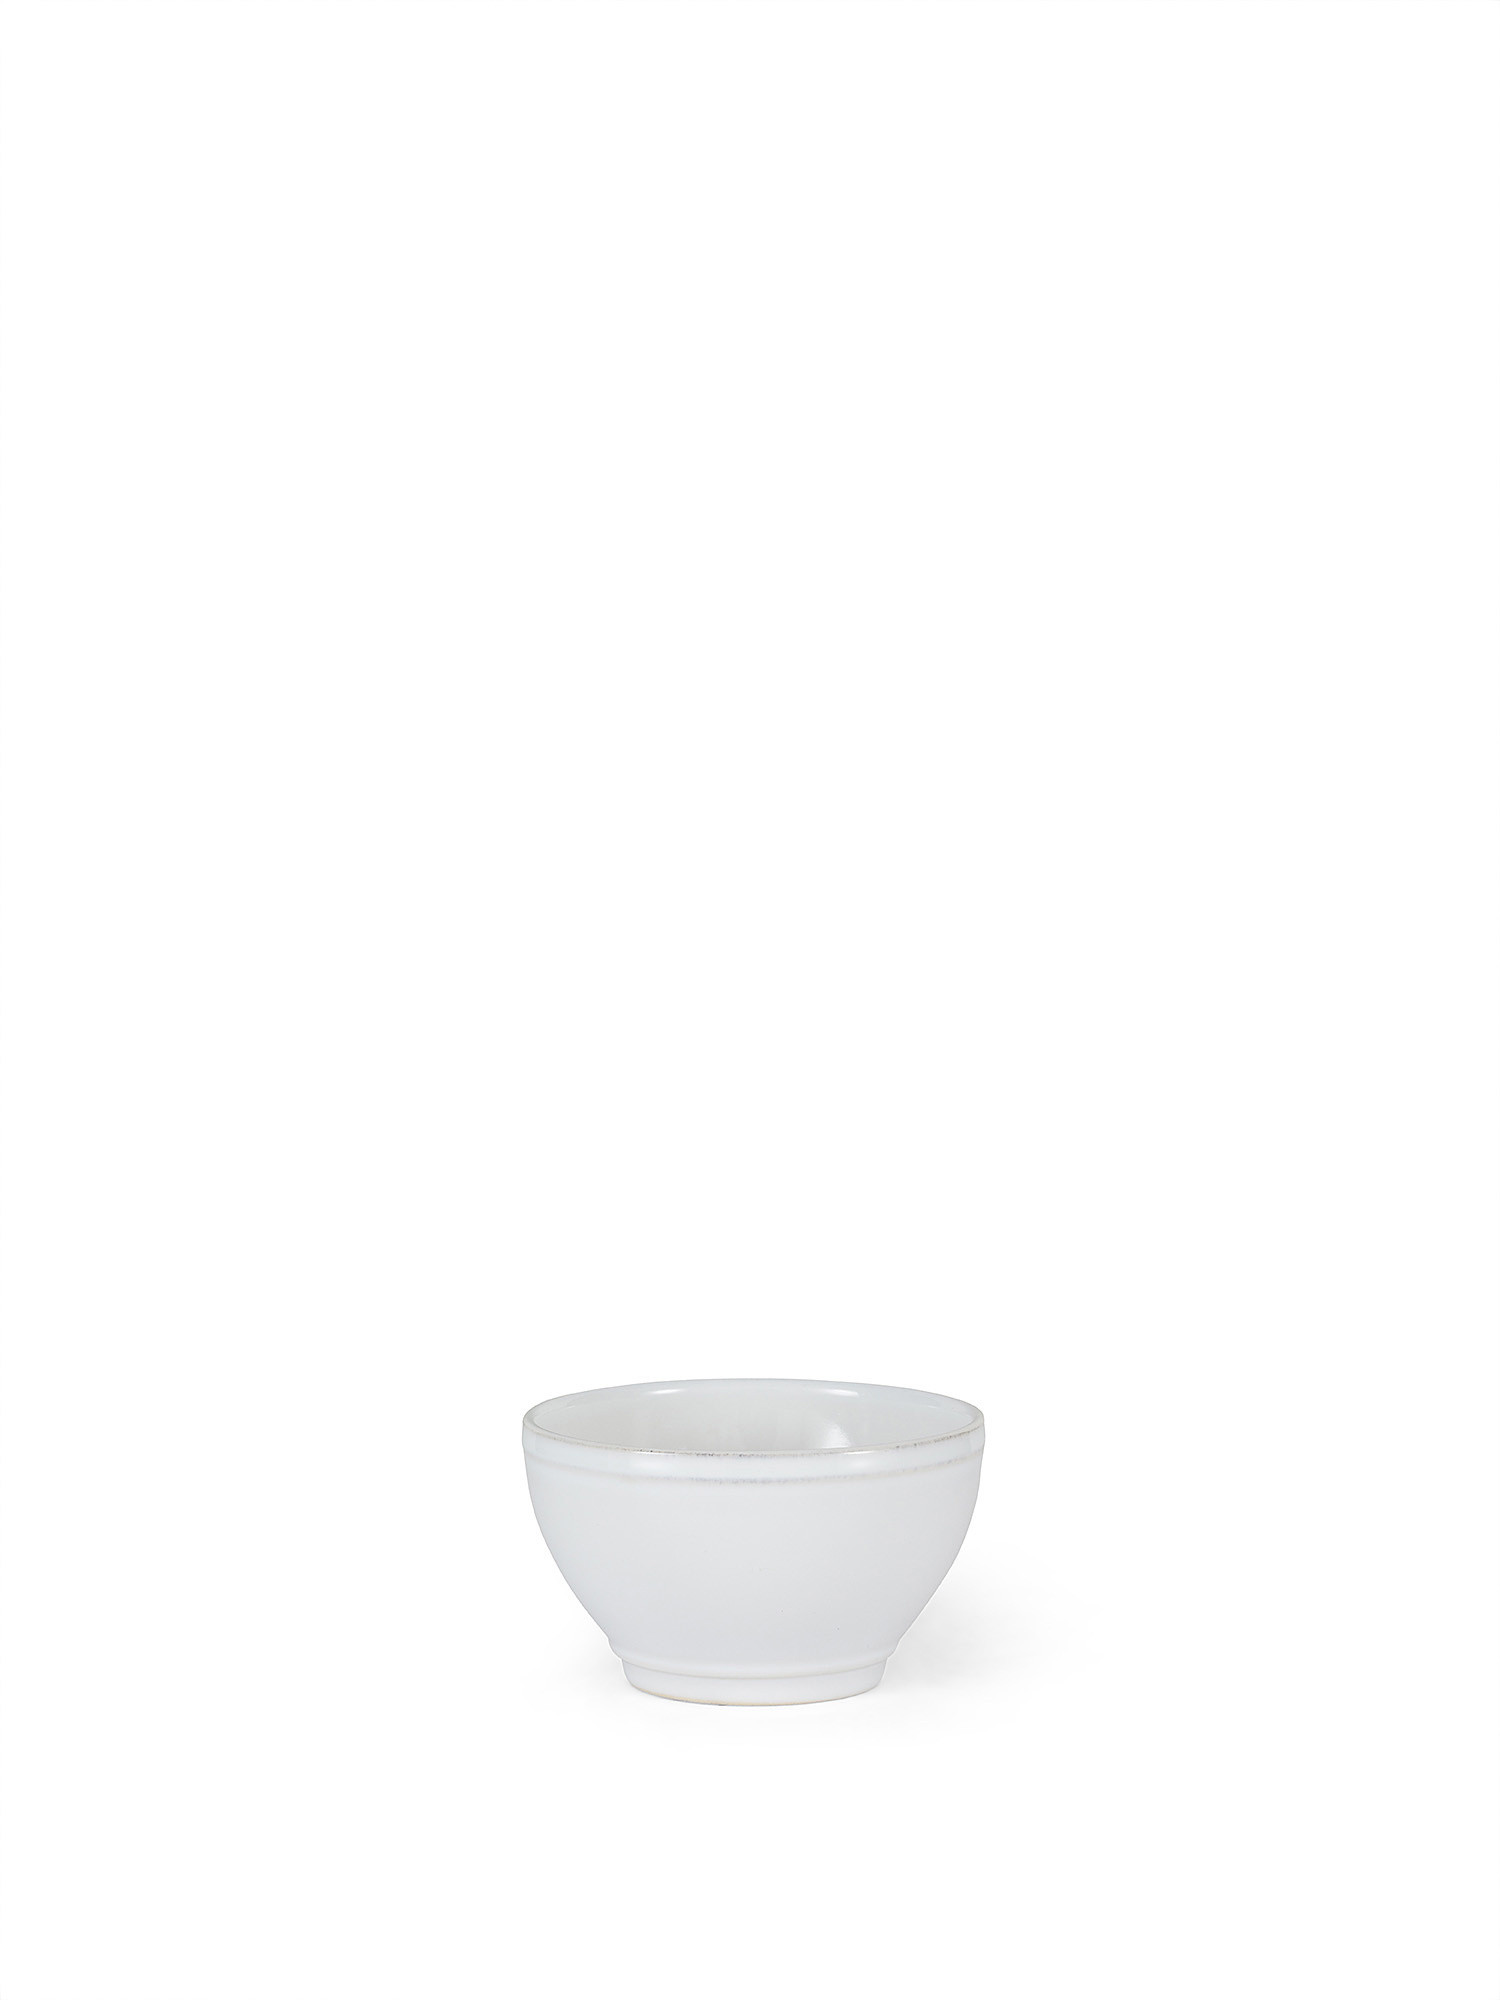 Coppetta ceramica Friso, Bianco, large image number 0